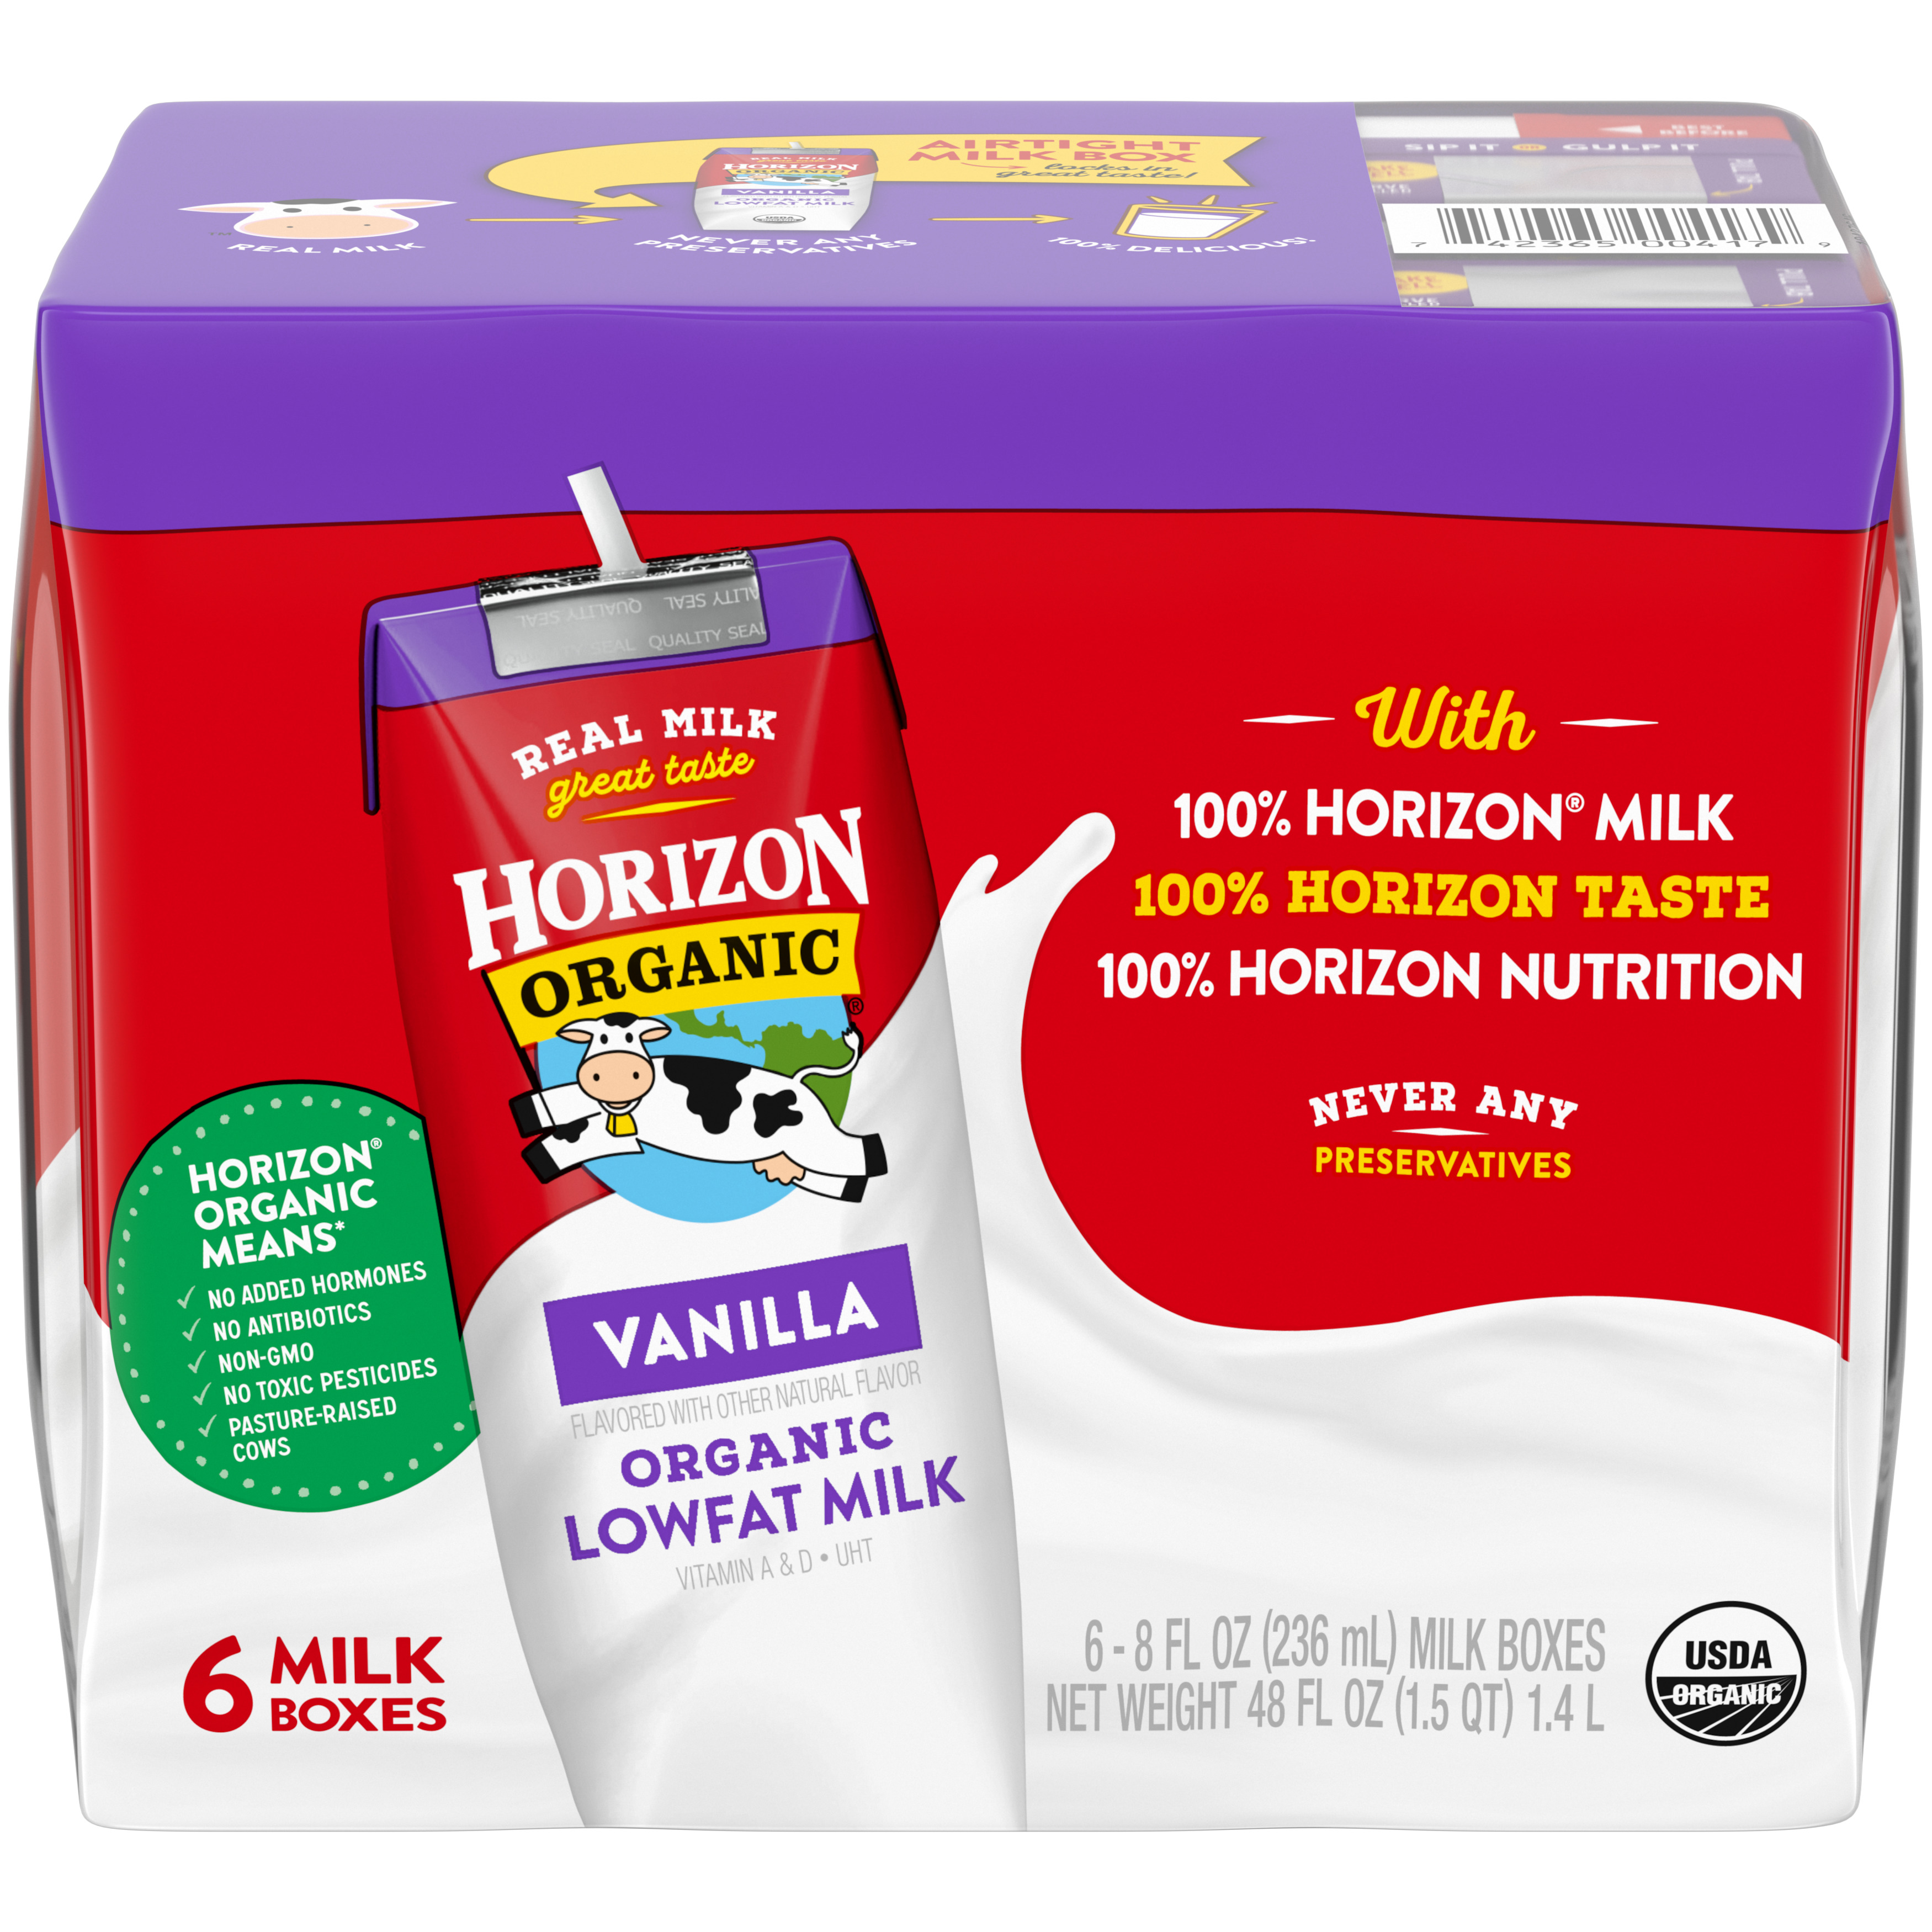 Horizon Organic Dairy Milk Organic 1% Lowfat Vanilla 3 innerpacks per case 48.0 fl